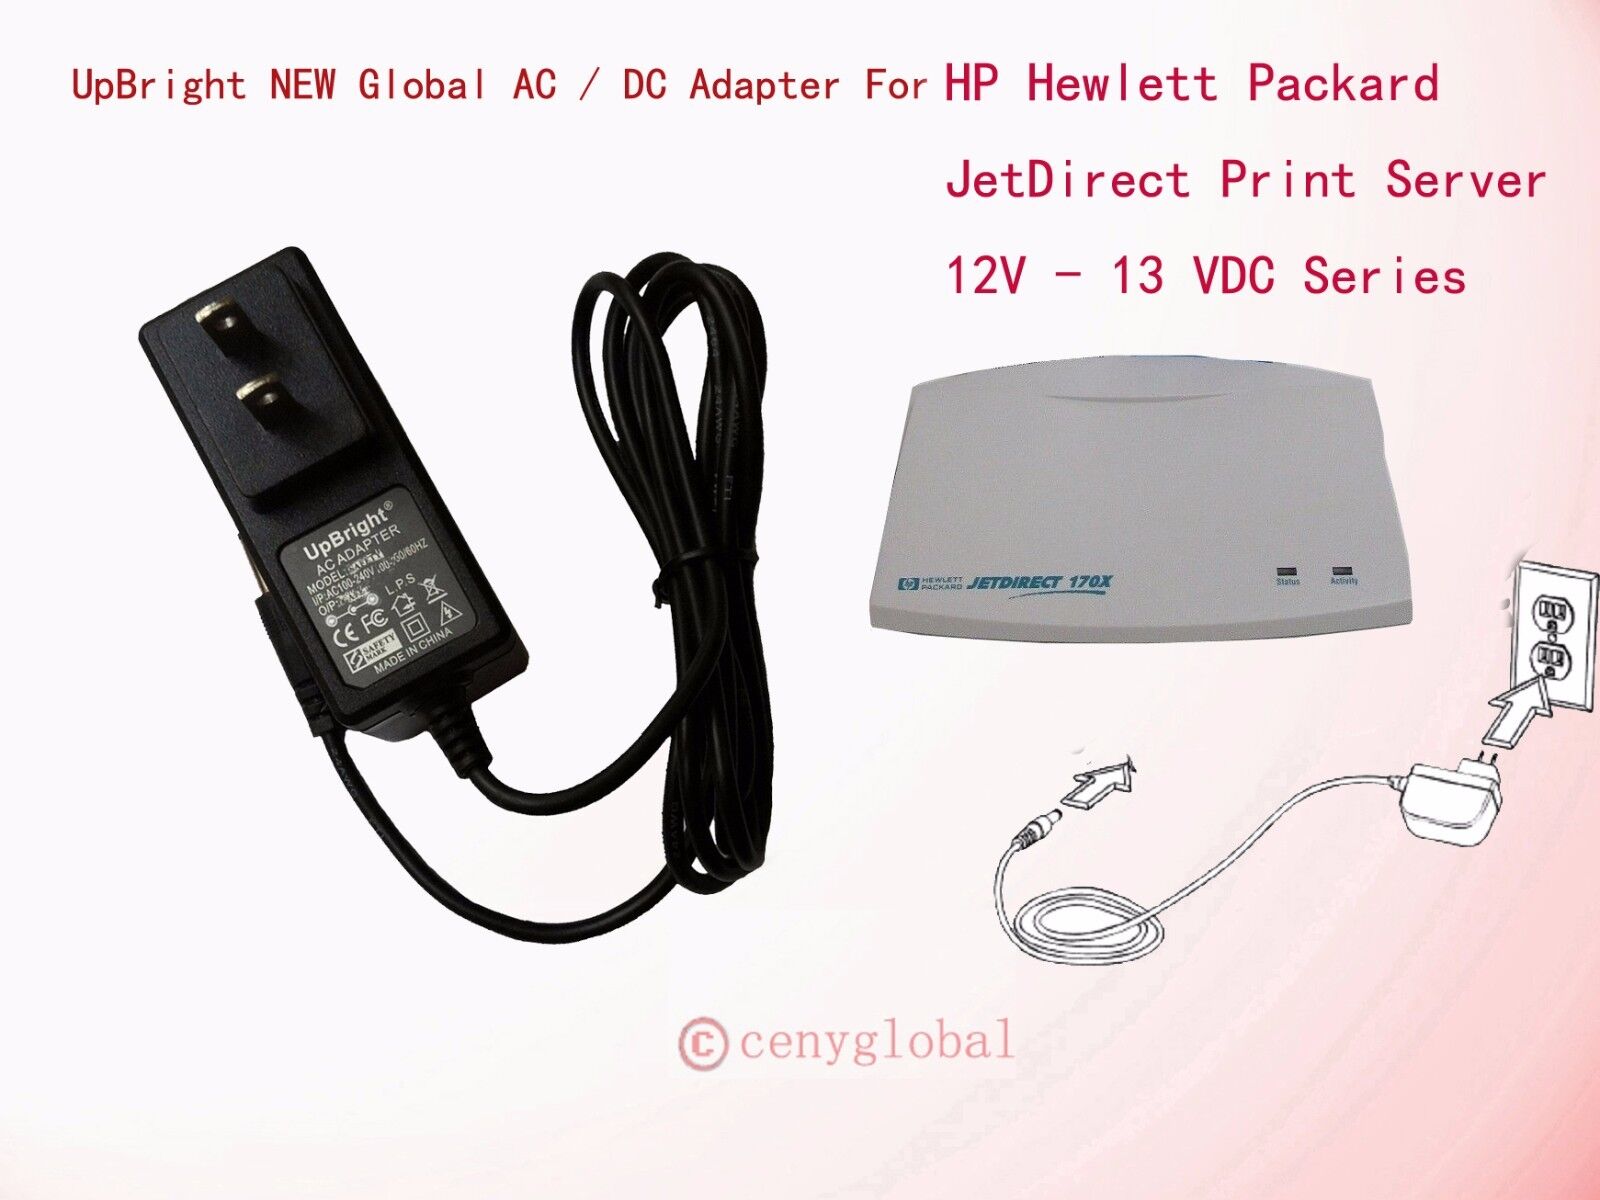 AC Power Adapter For HP Hewlett Packard JetDirect Print Server 12V-13 VDC Series